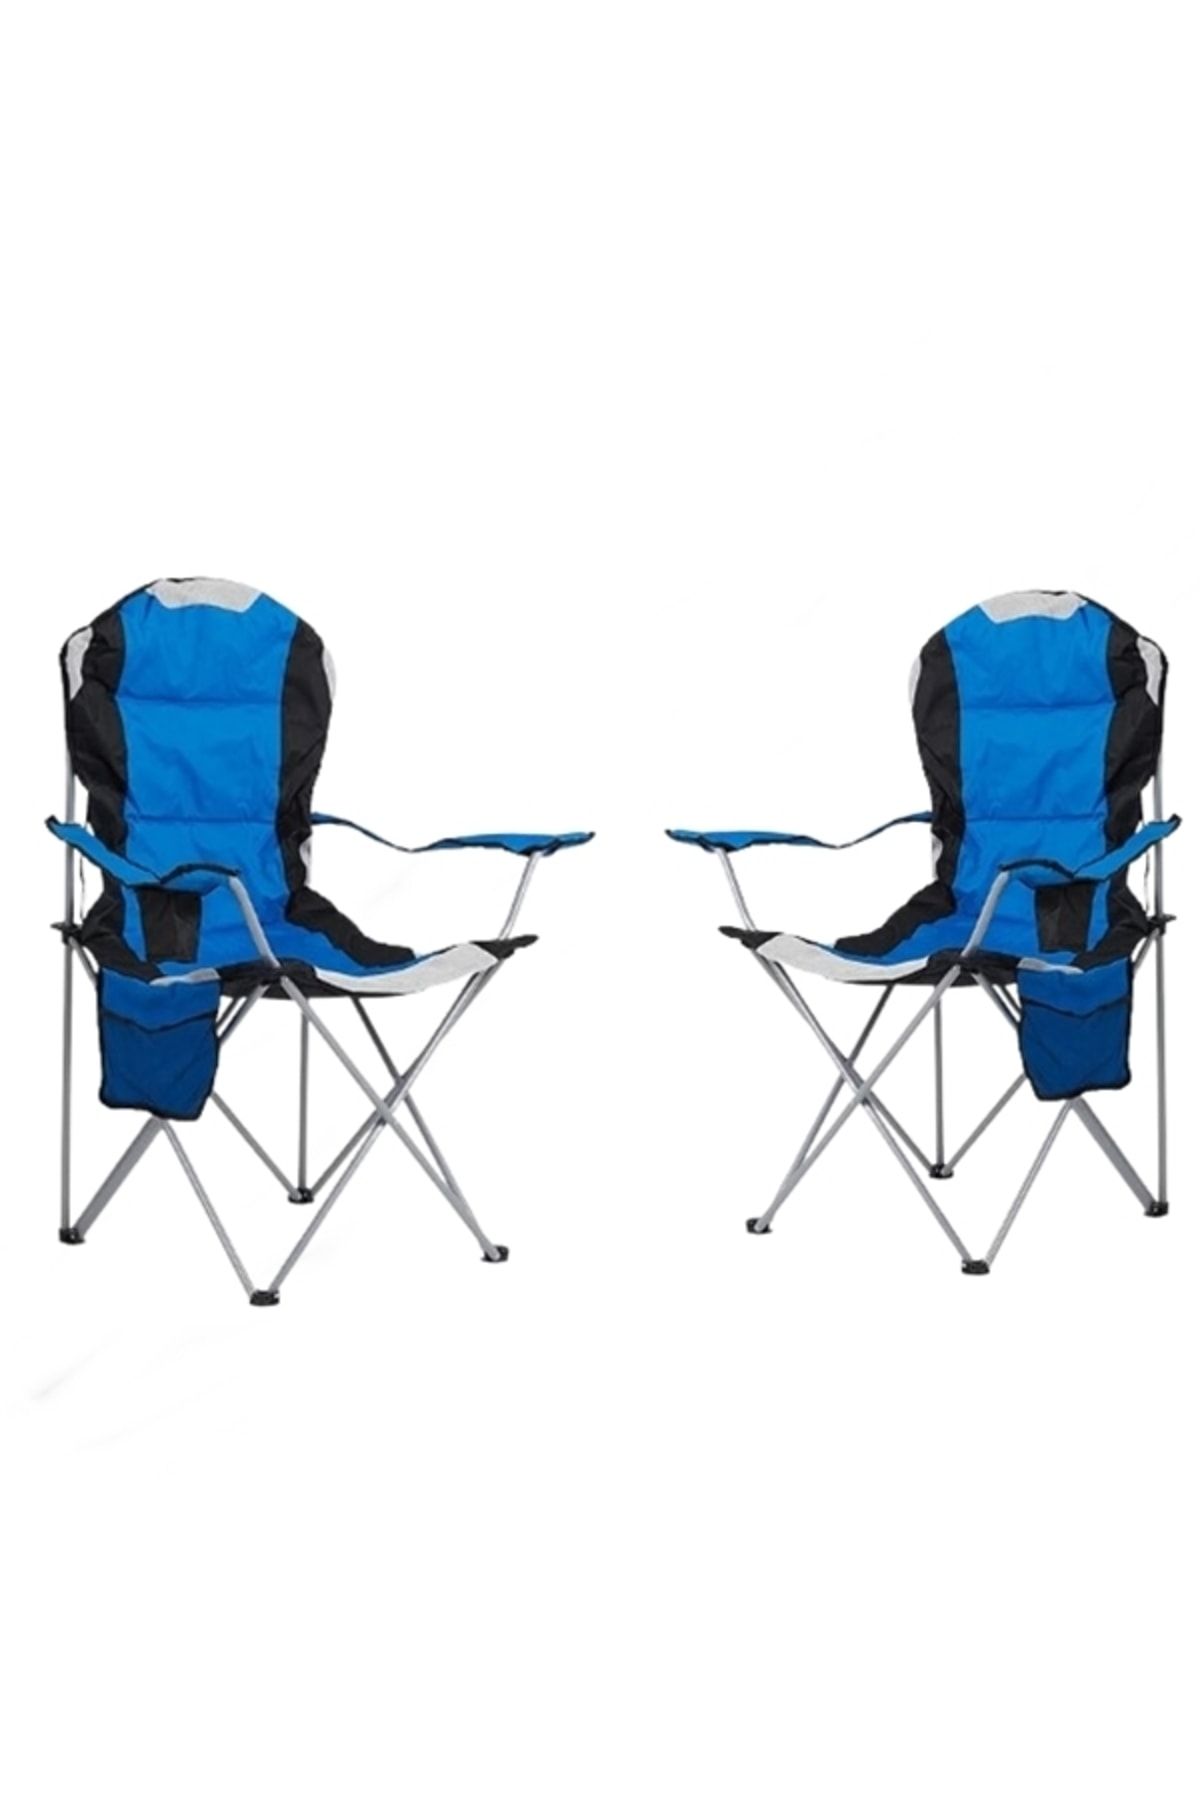 gaman Xl 1. Kalite 2 Li Set Katlanır Plaj Ve Kamp Sandalyesi Seti Kamp Koltuğu 120kg Kapasite Mavi